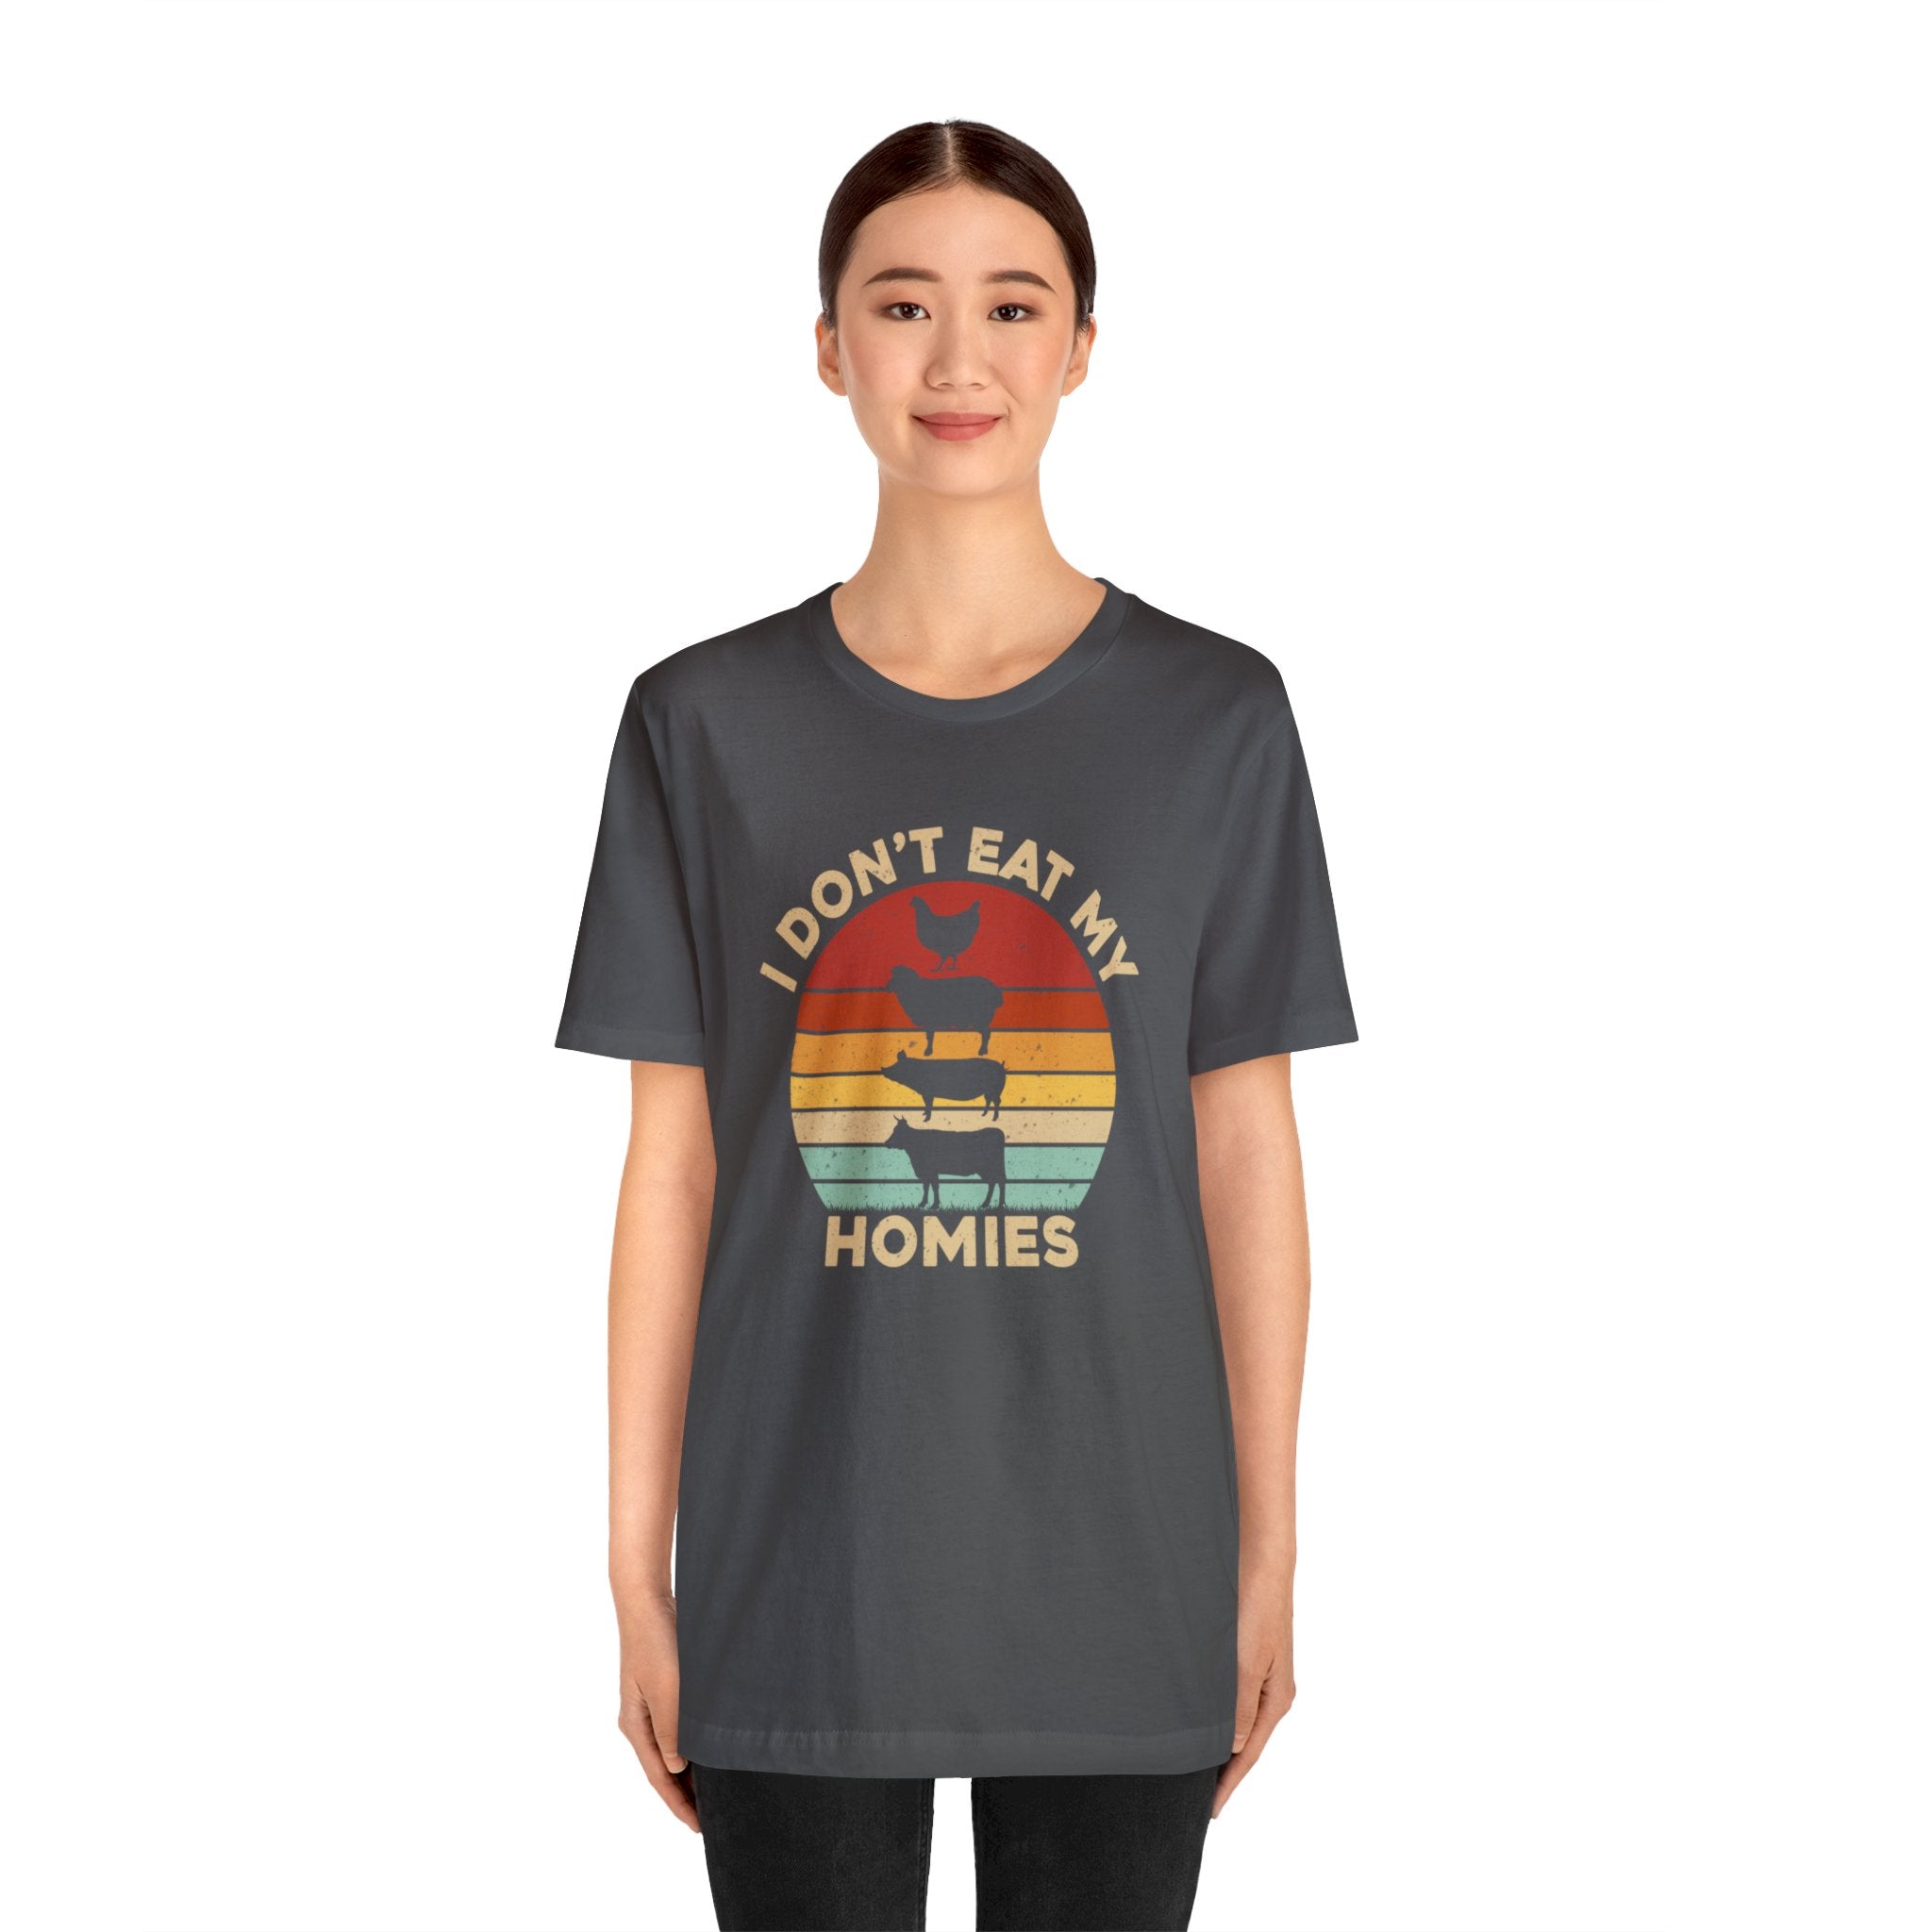 "I Don't Eat My Homies" Vegan Funny Unisex Jersey Short Sleeve Tee - Humorous Plant-Based Lifestyle Statement Shirt